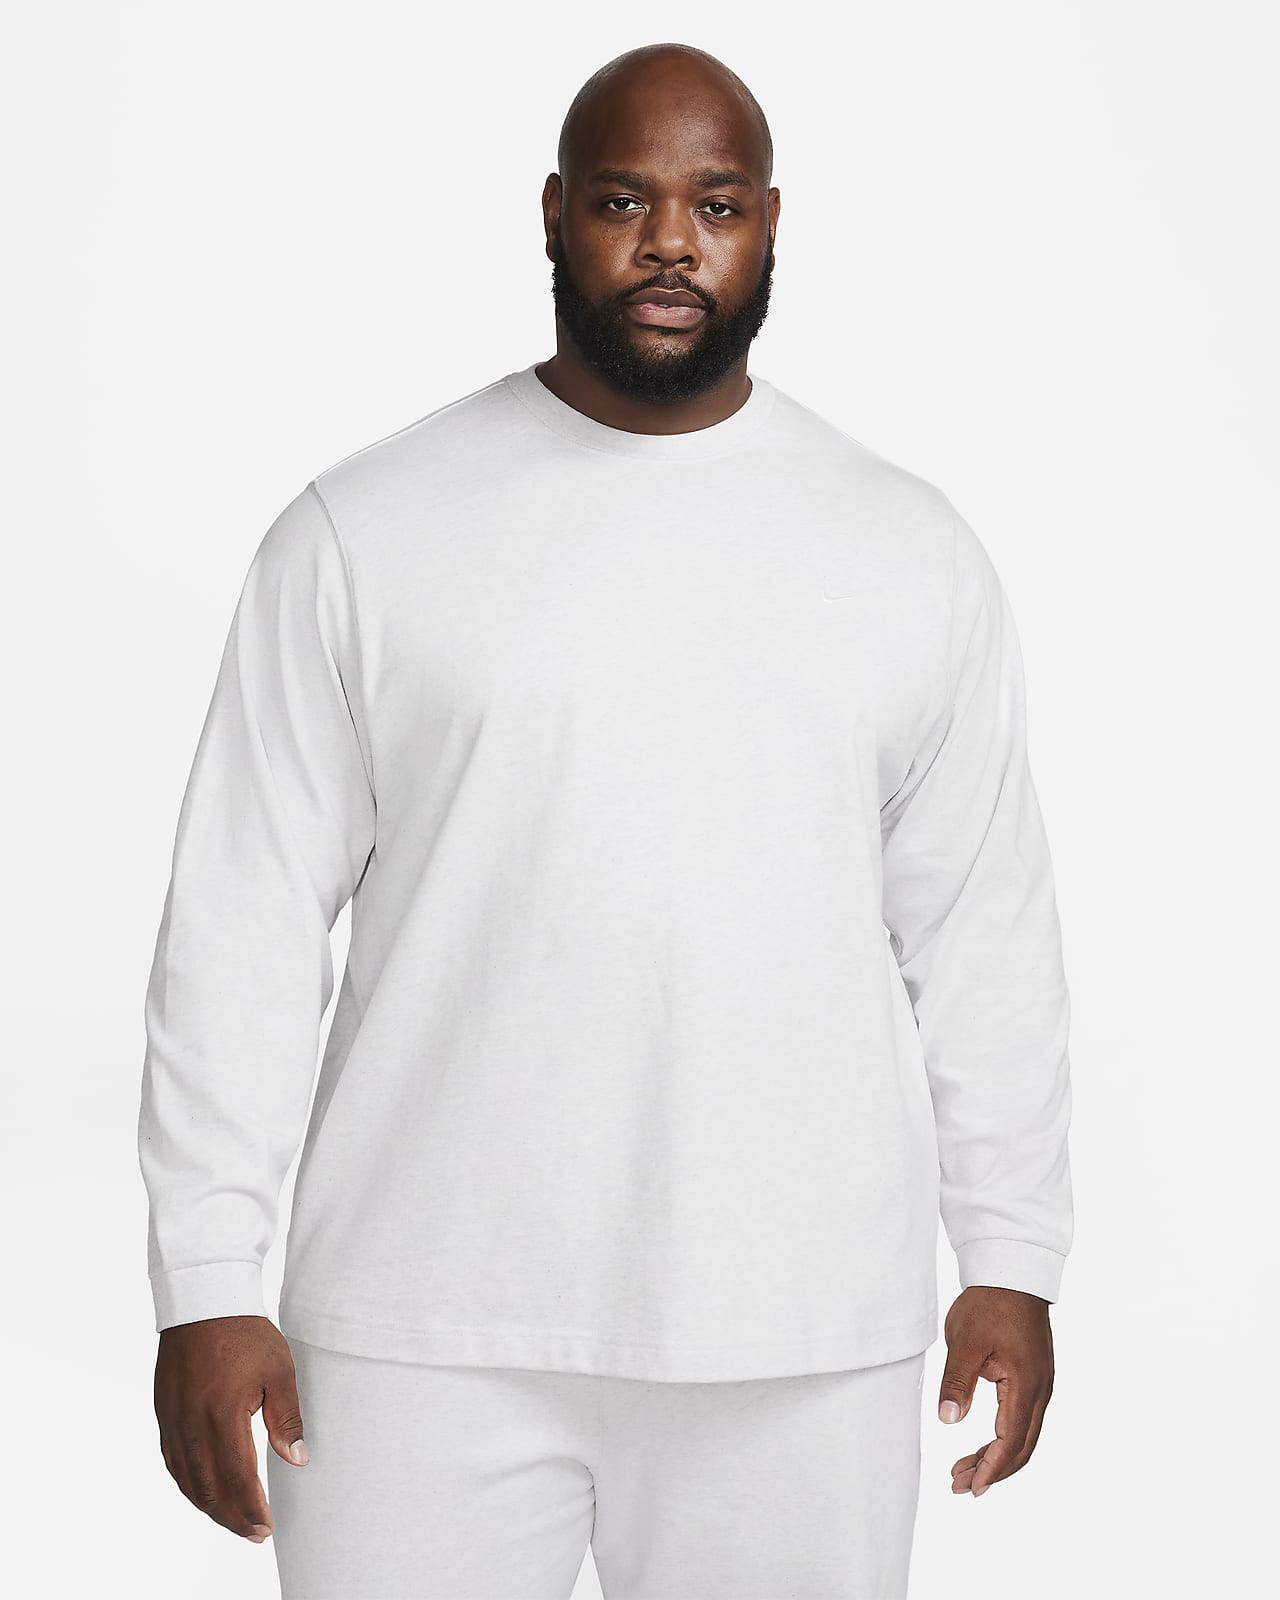 Swoosh Men's Long-Sleeve Top. Nike.com